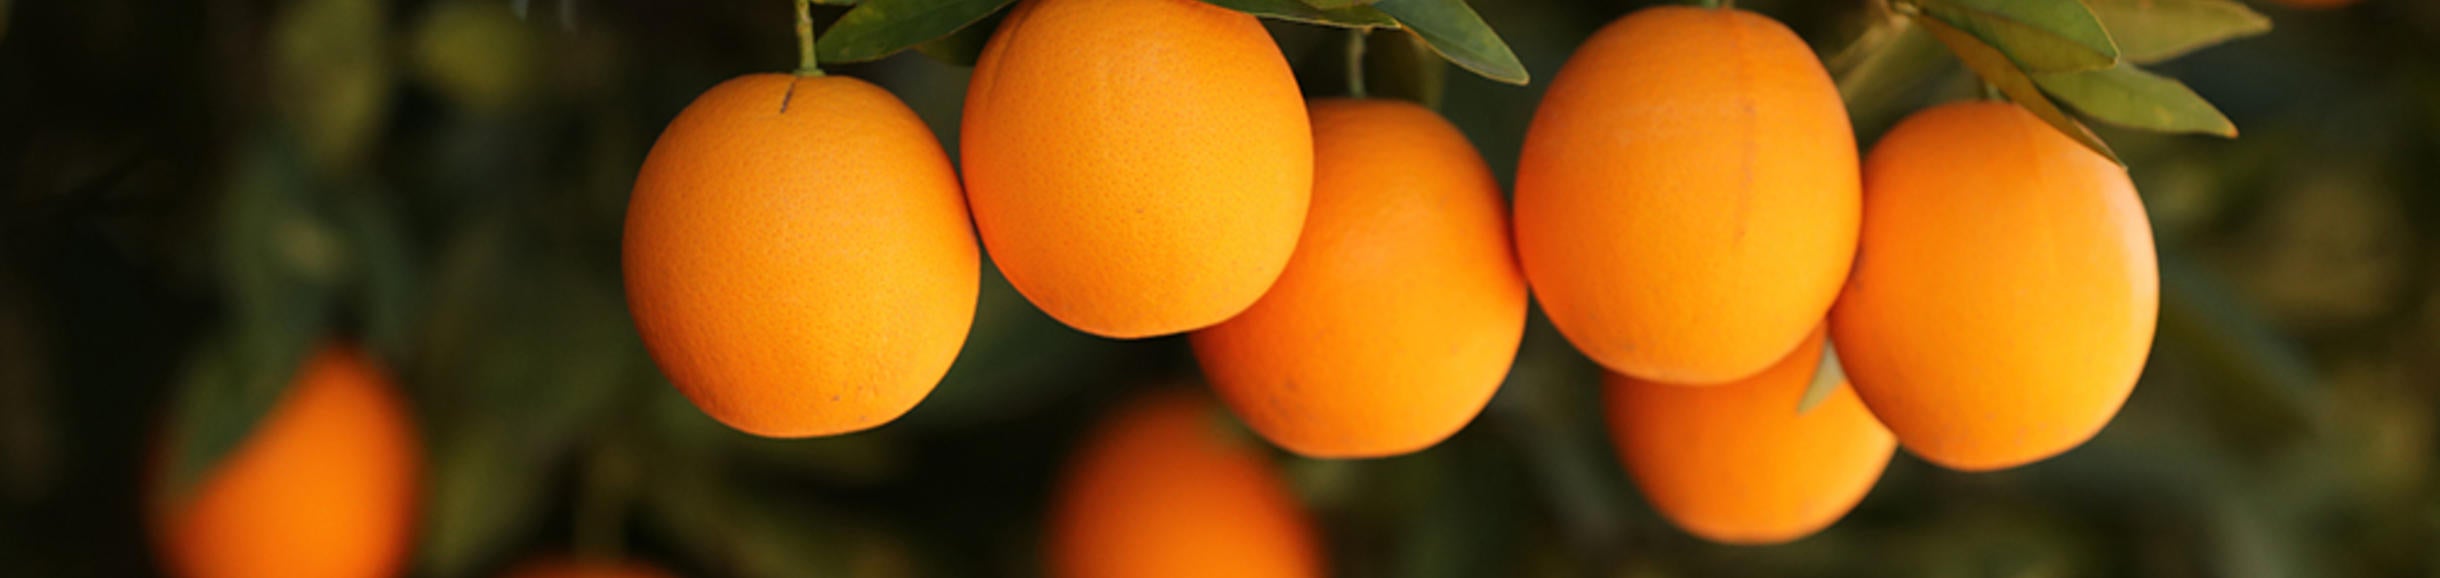 oranges on a tree (c) UCR/Stan Lim